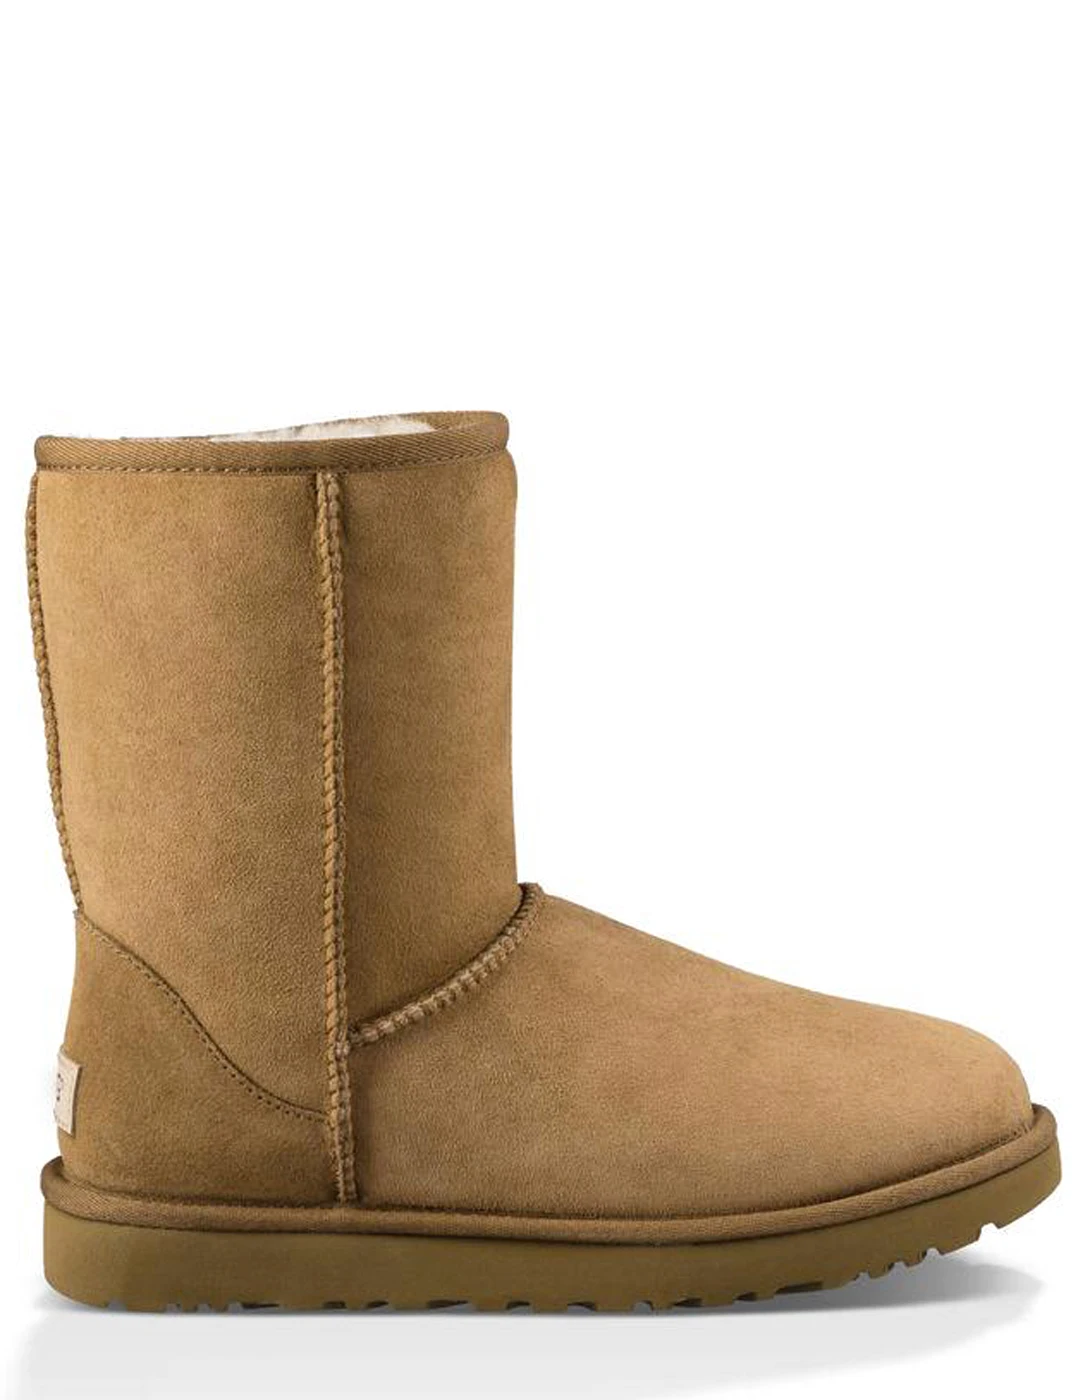 UGG boots classic Short II brown|ugg 